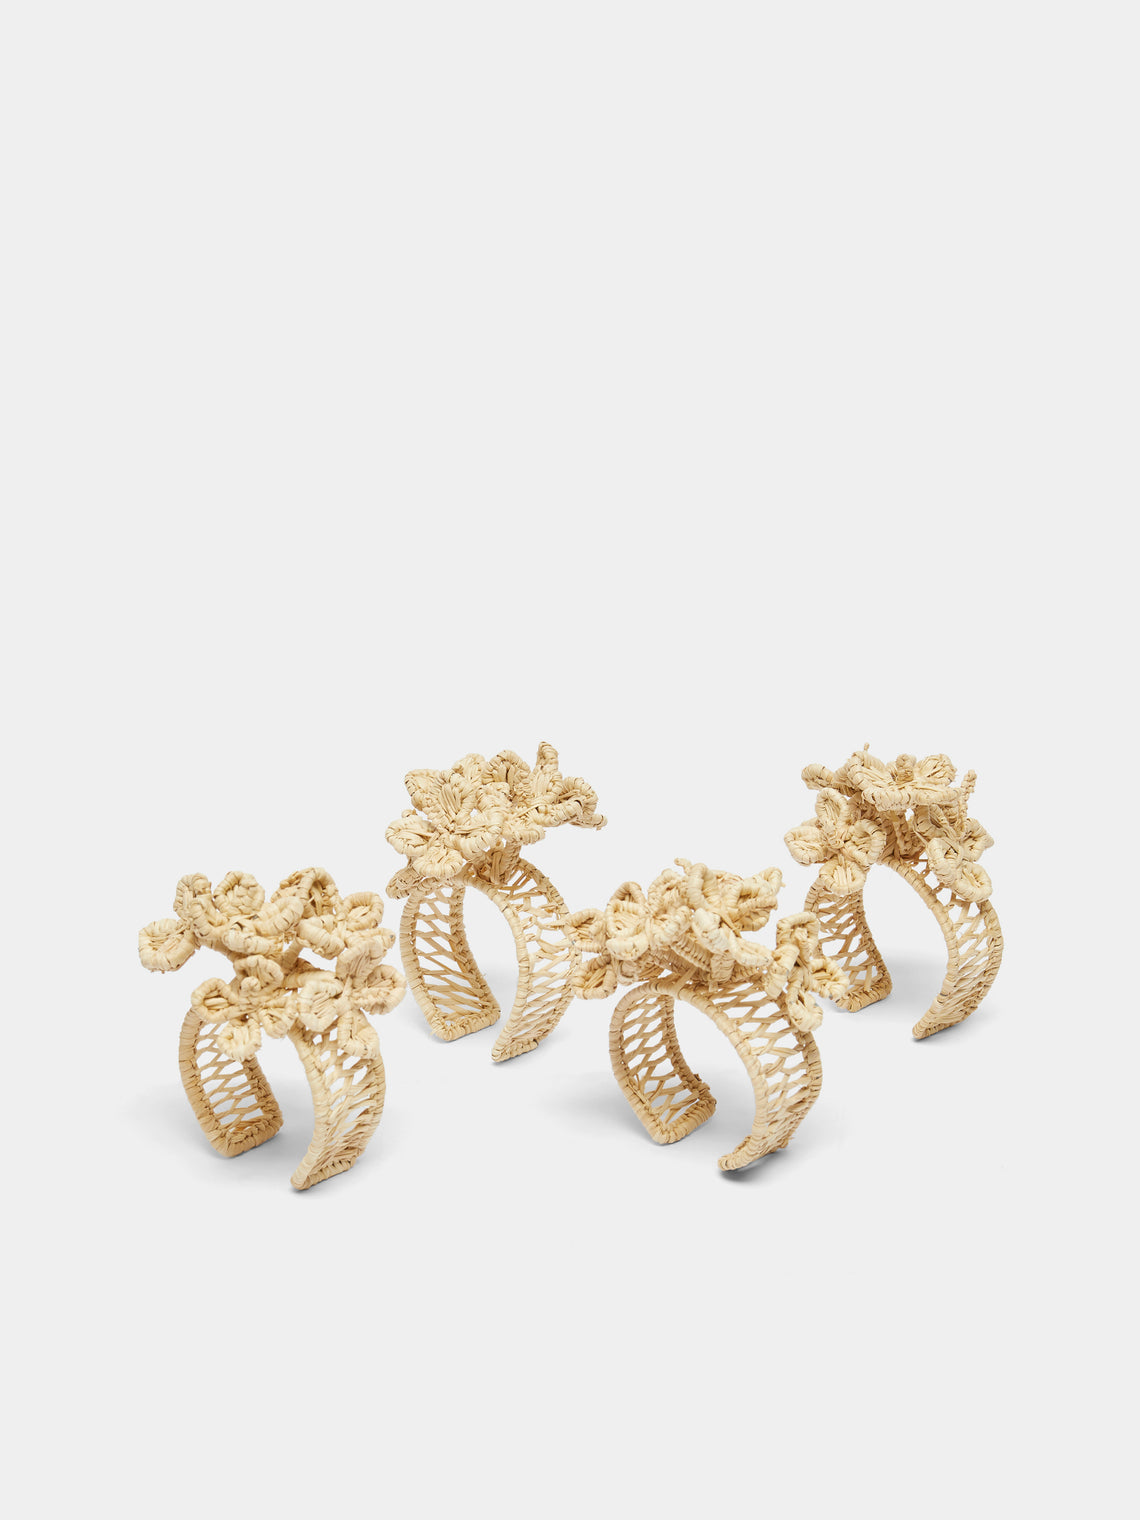 Artesanías del Atlántico - Coral Flower Handwoven Palm Napkin Rings (Set of 4) - Beige - ABASK